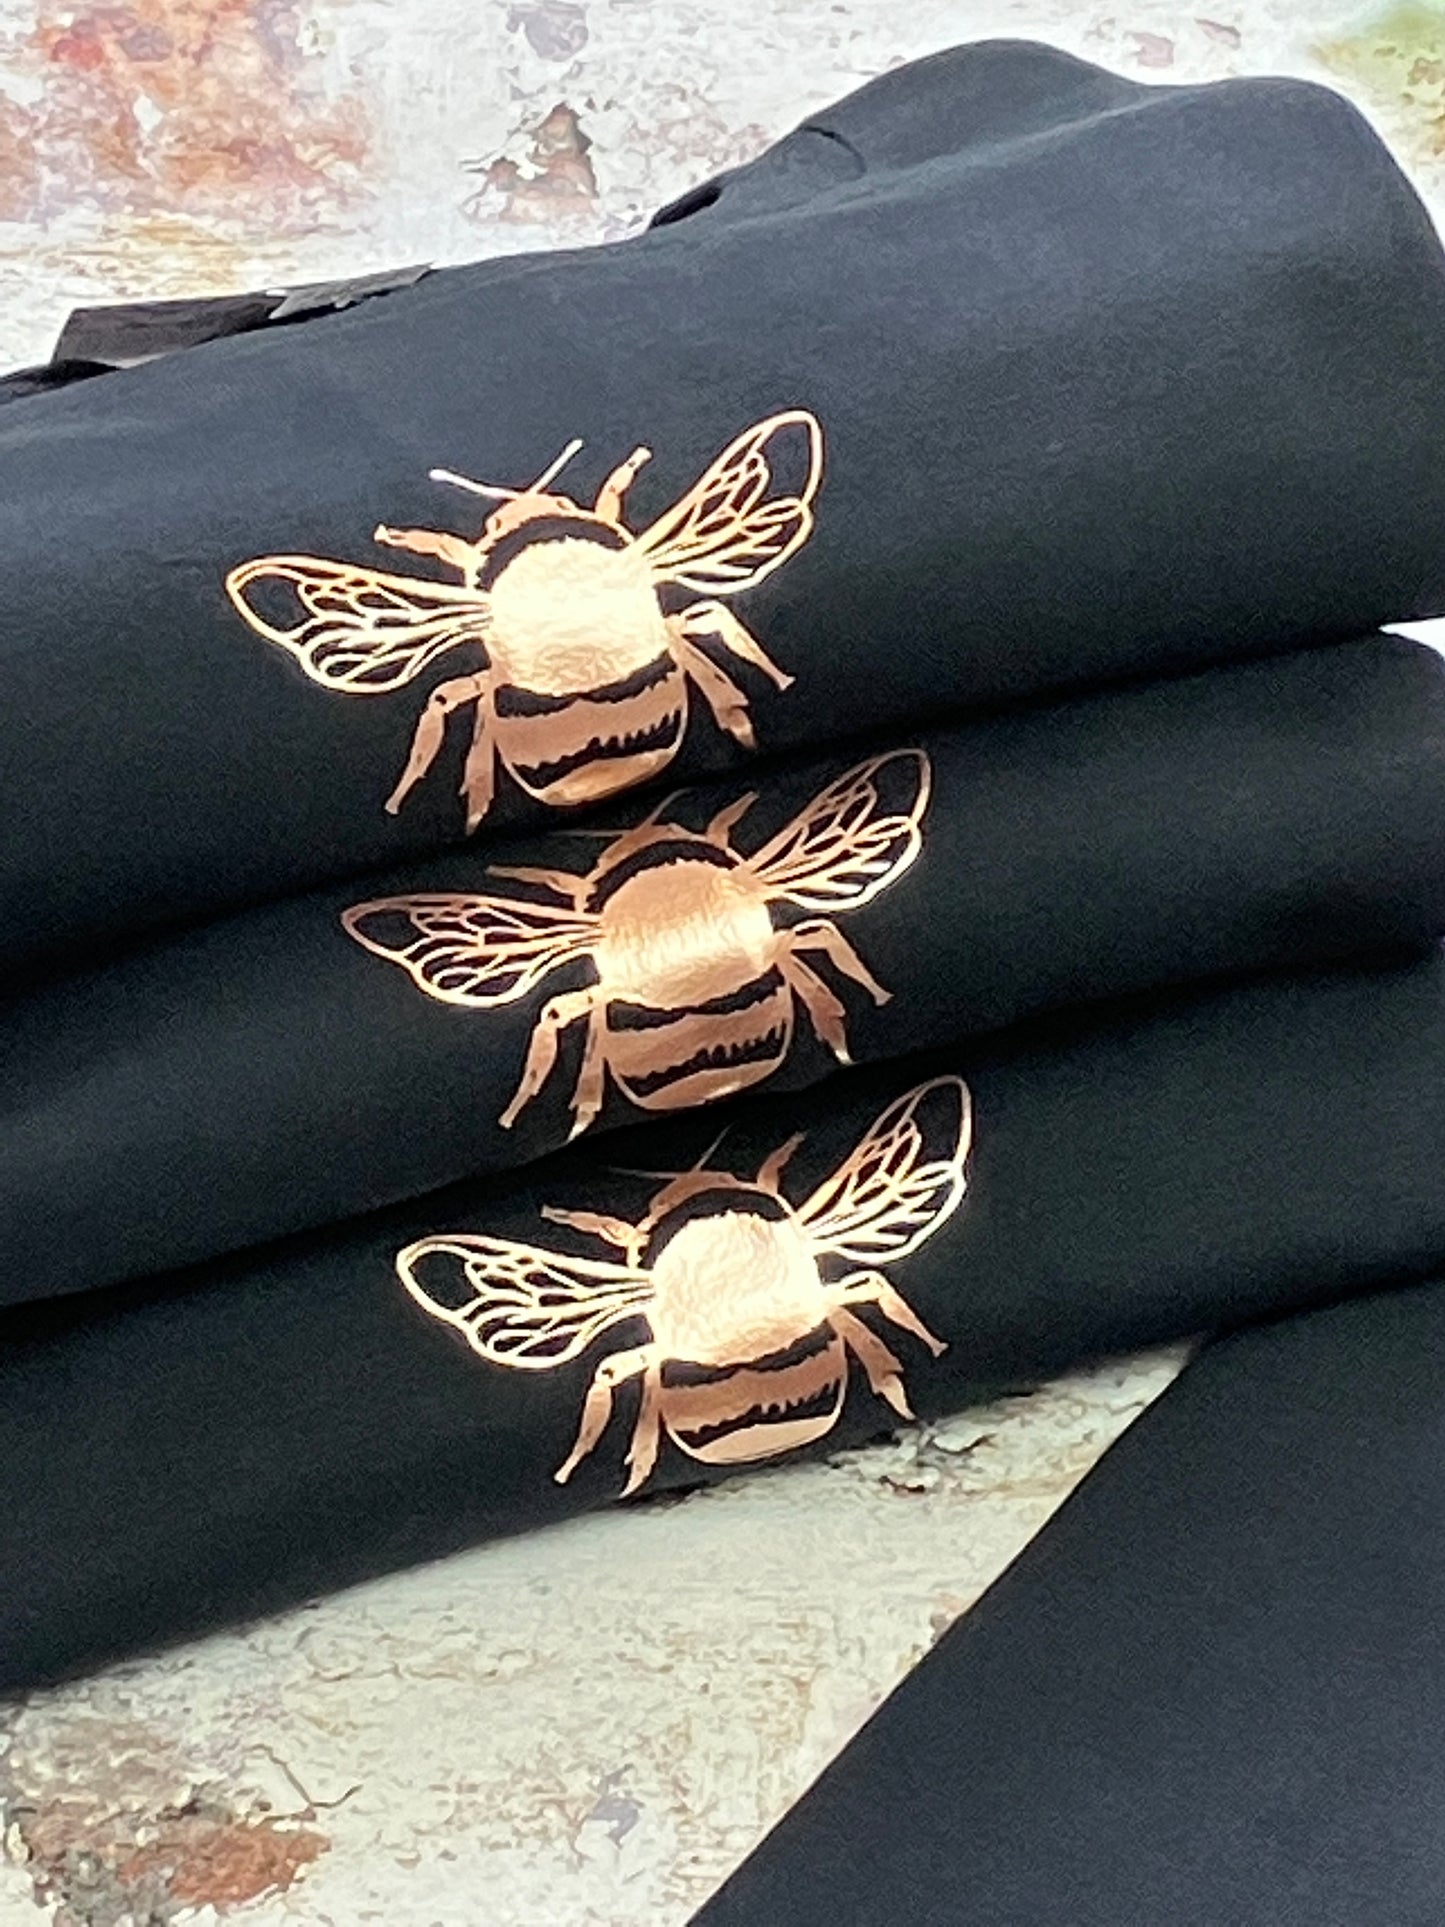 Metallic Bee T-shirt